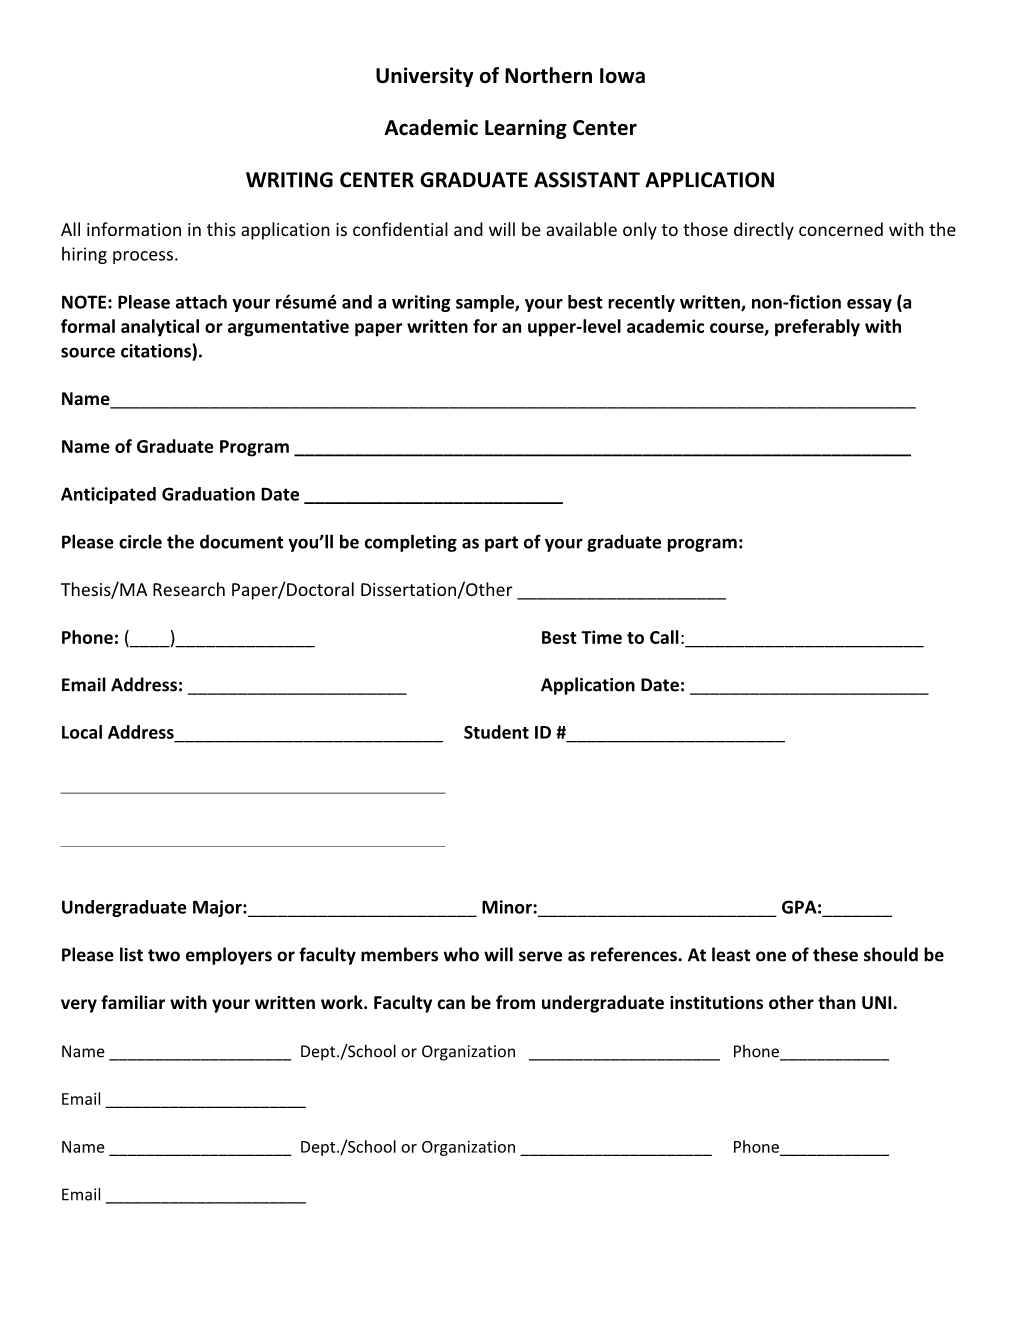 Writing Center Graduate Assistant Application